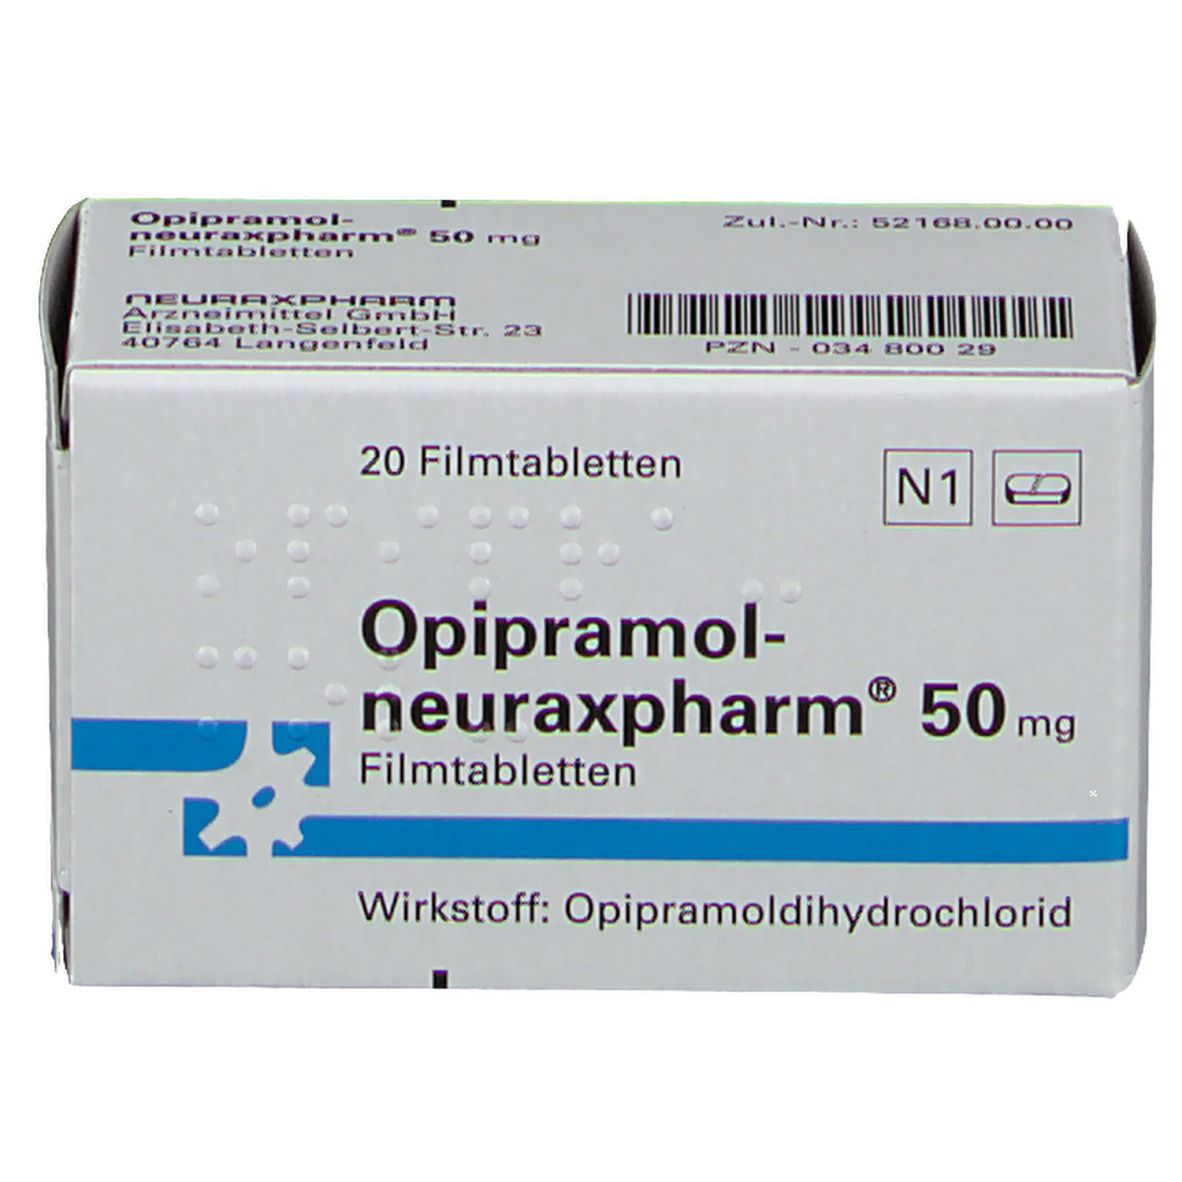 Opipramol-neuraxpharm® 50 mg